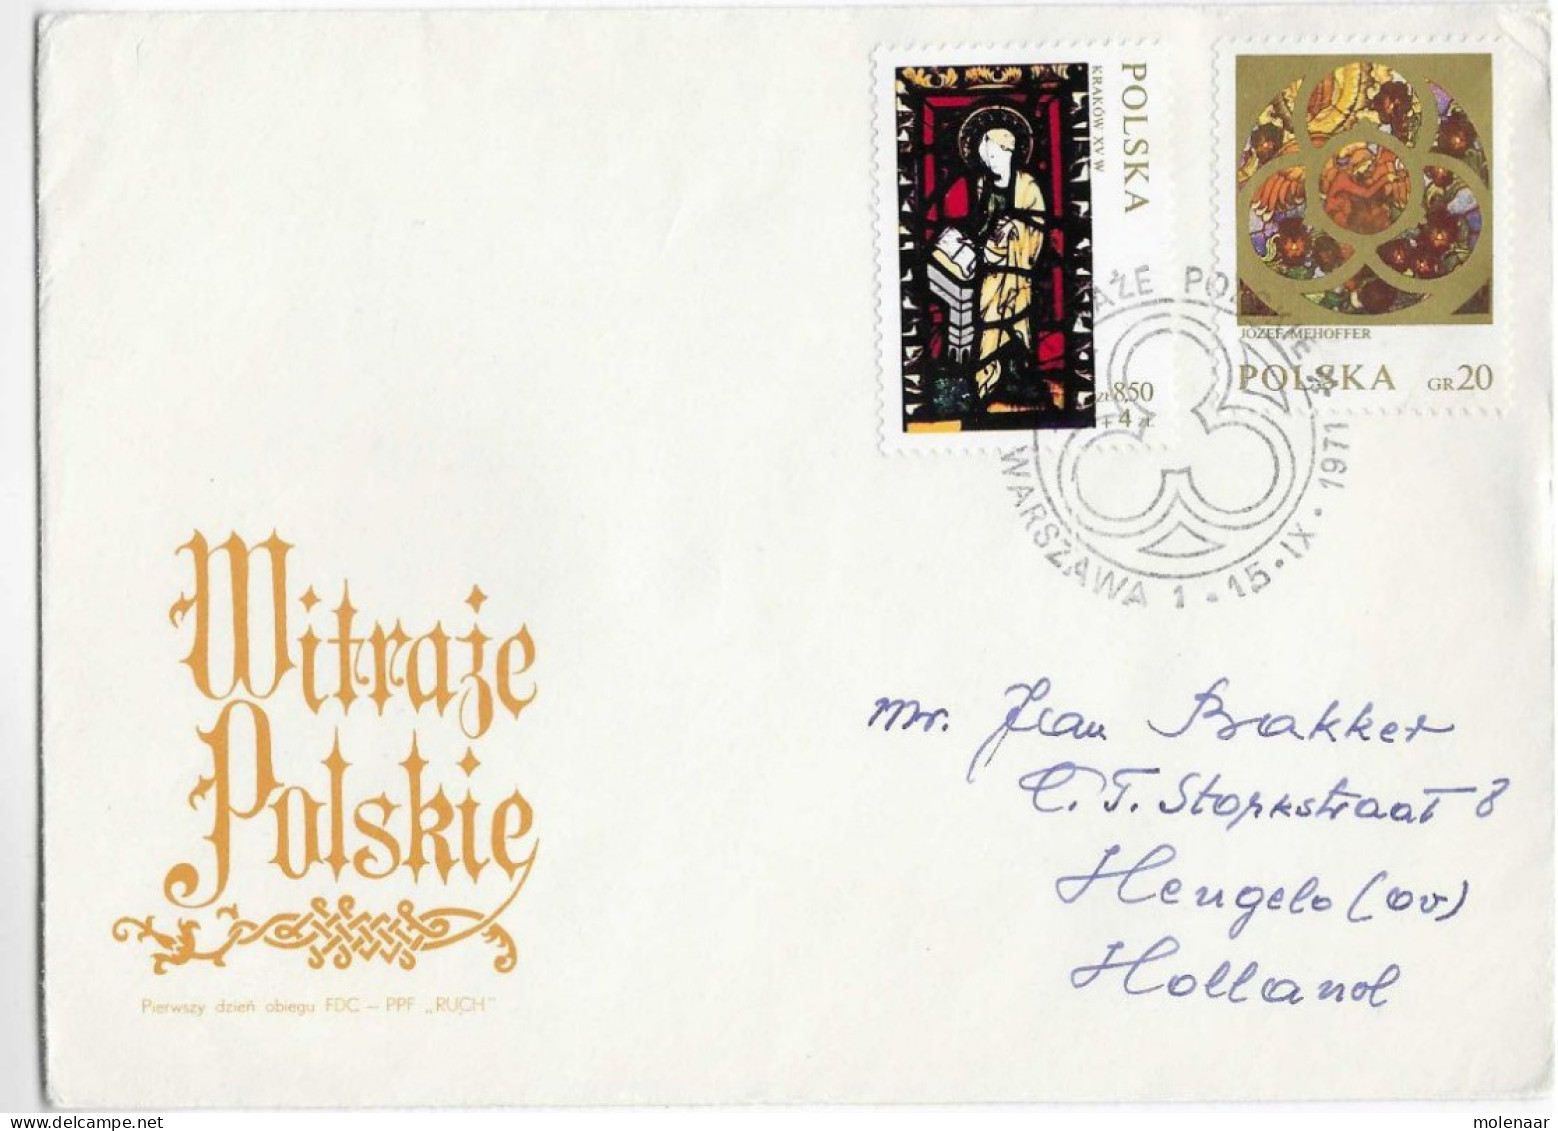 Postzegels > Europa > Polen > 1944-.... Republiek > 1971-80 >brief Me No. 2105 (17111) - Lettres & Documents